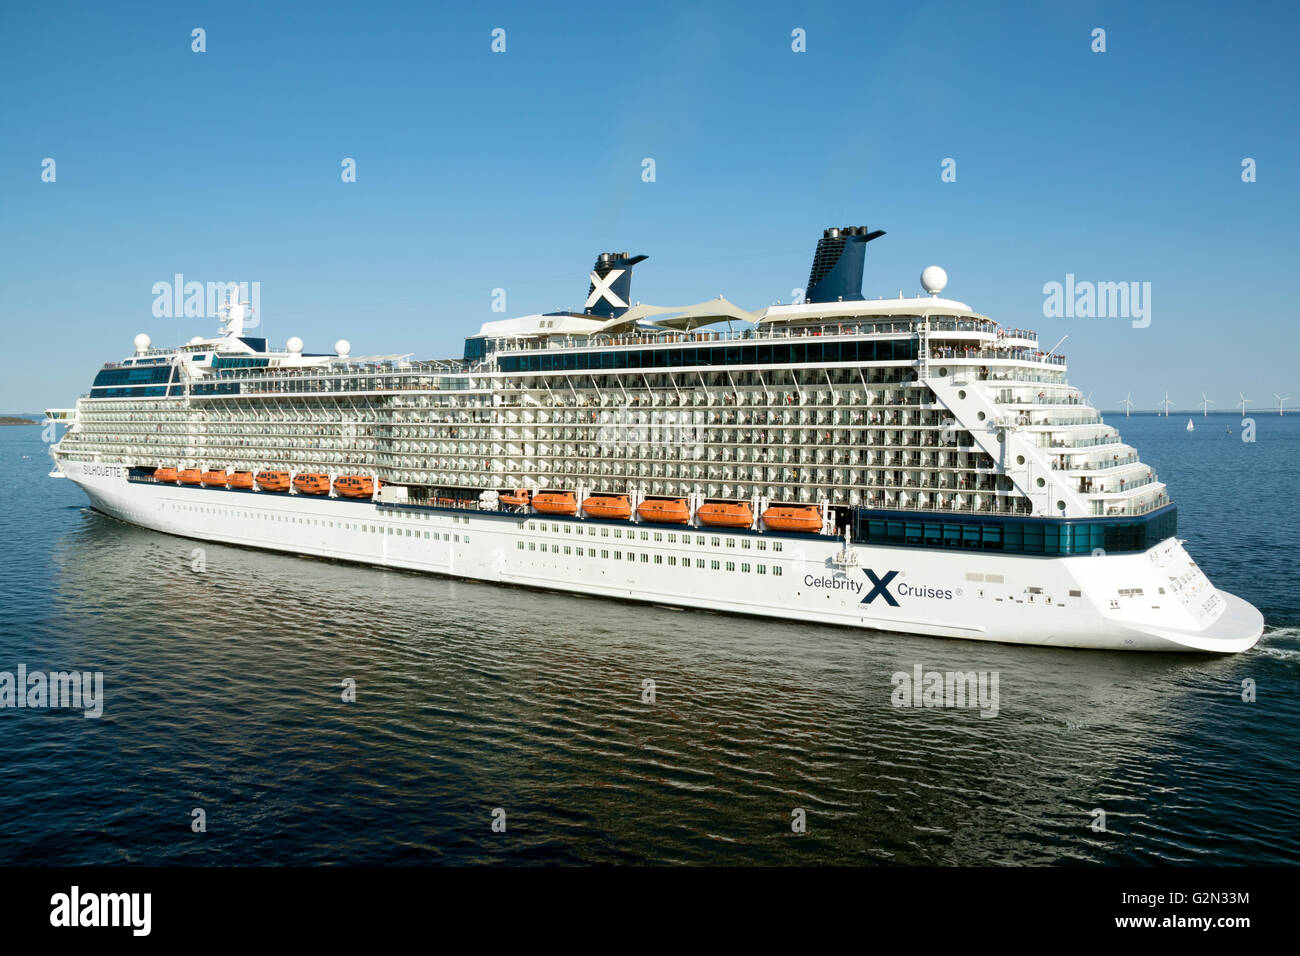 cruise ship with big x